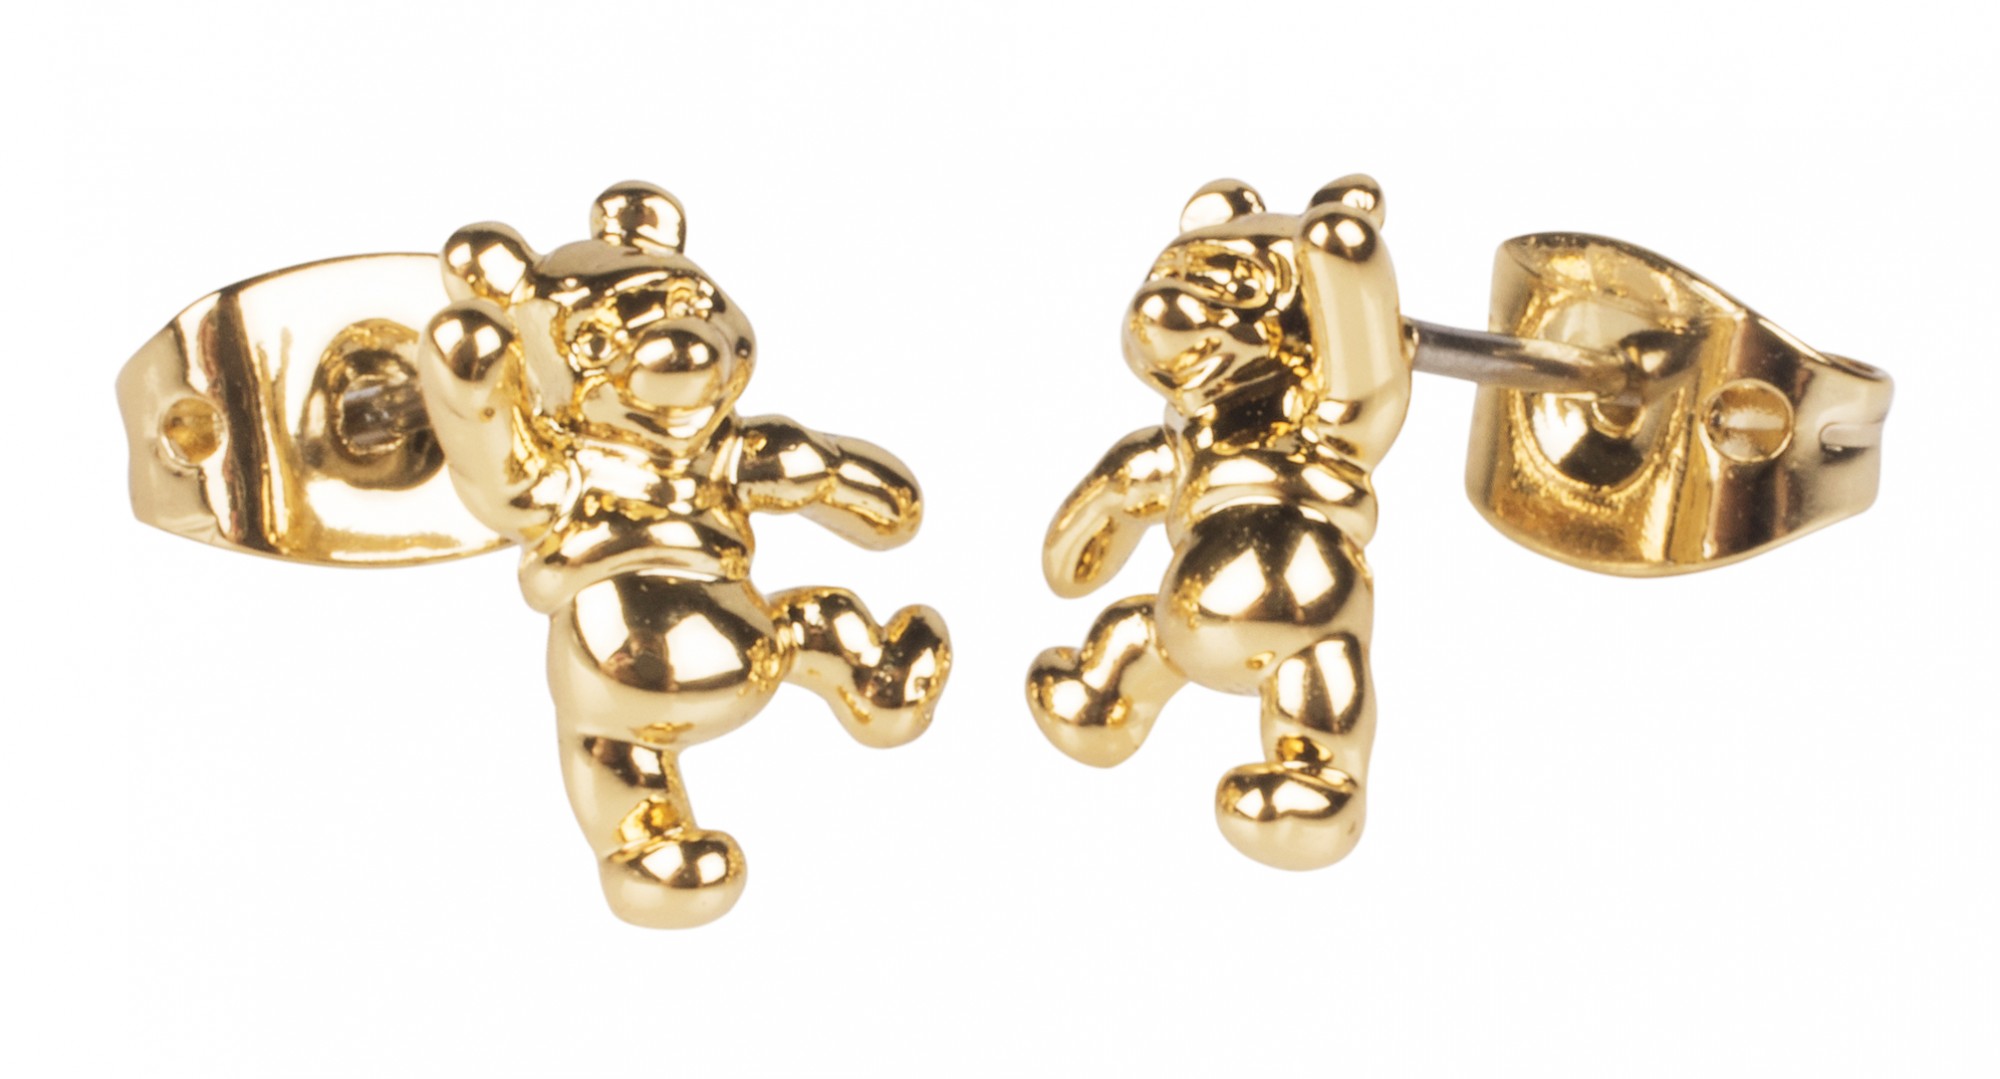 Winnie the pooh earrings gold